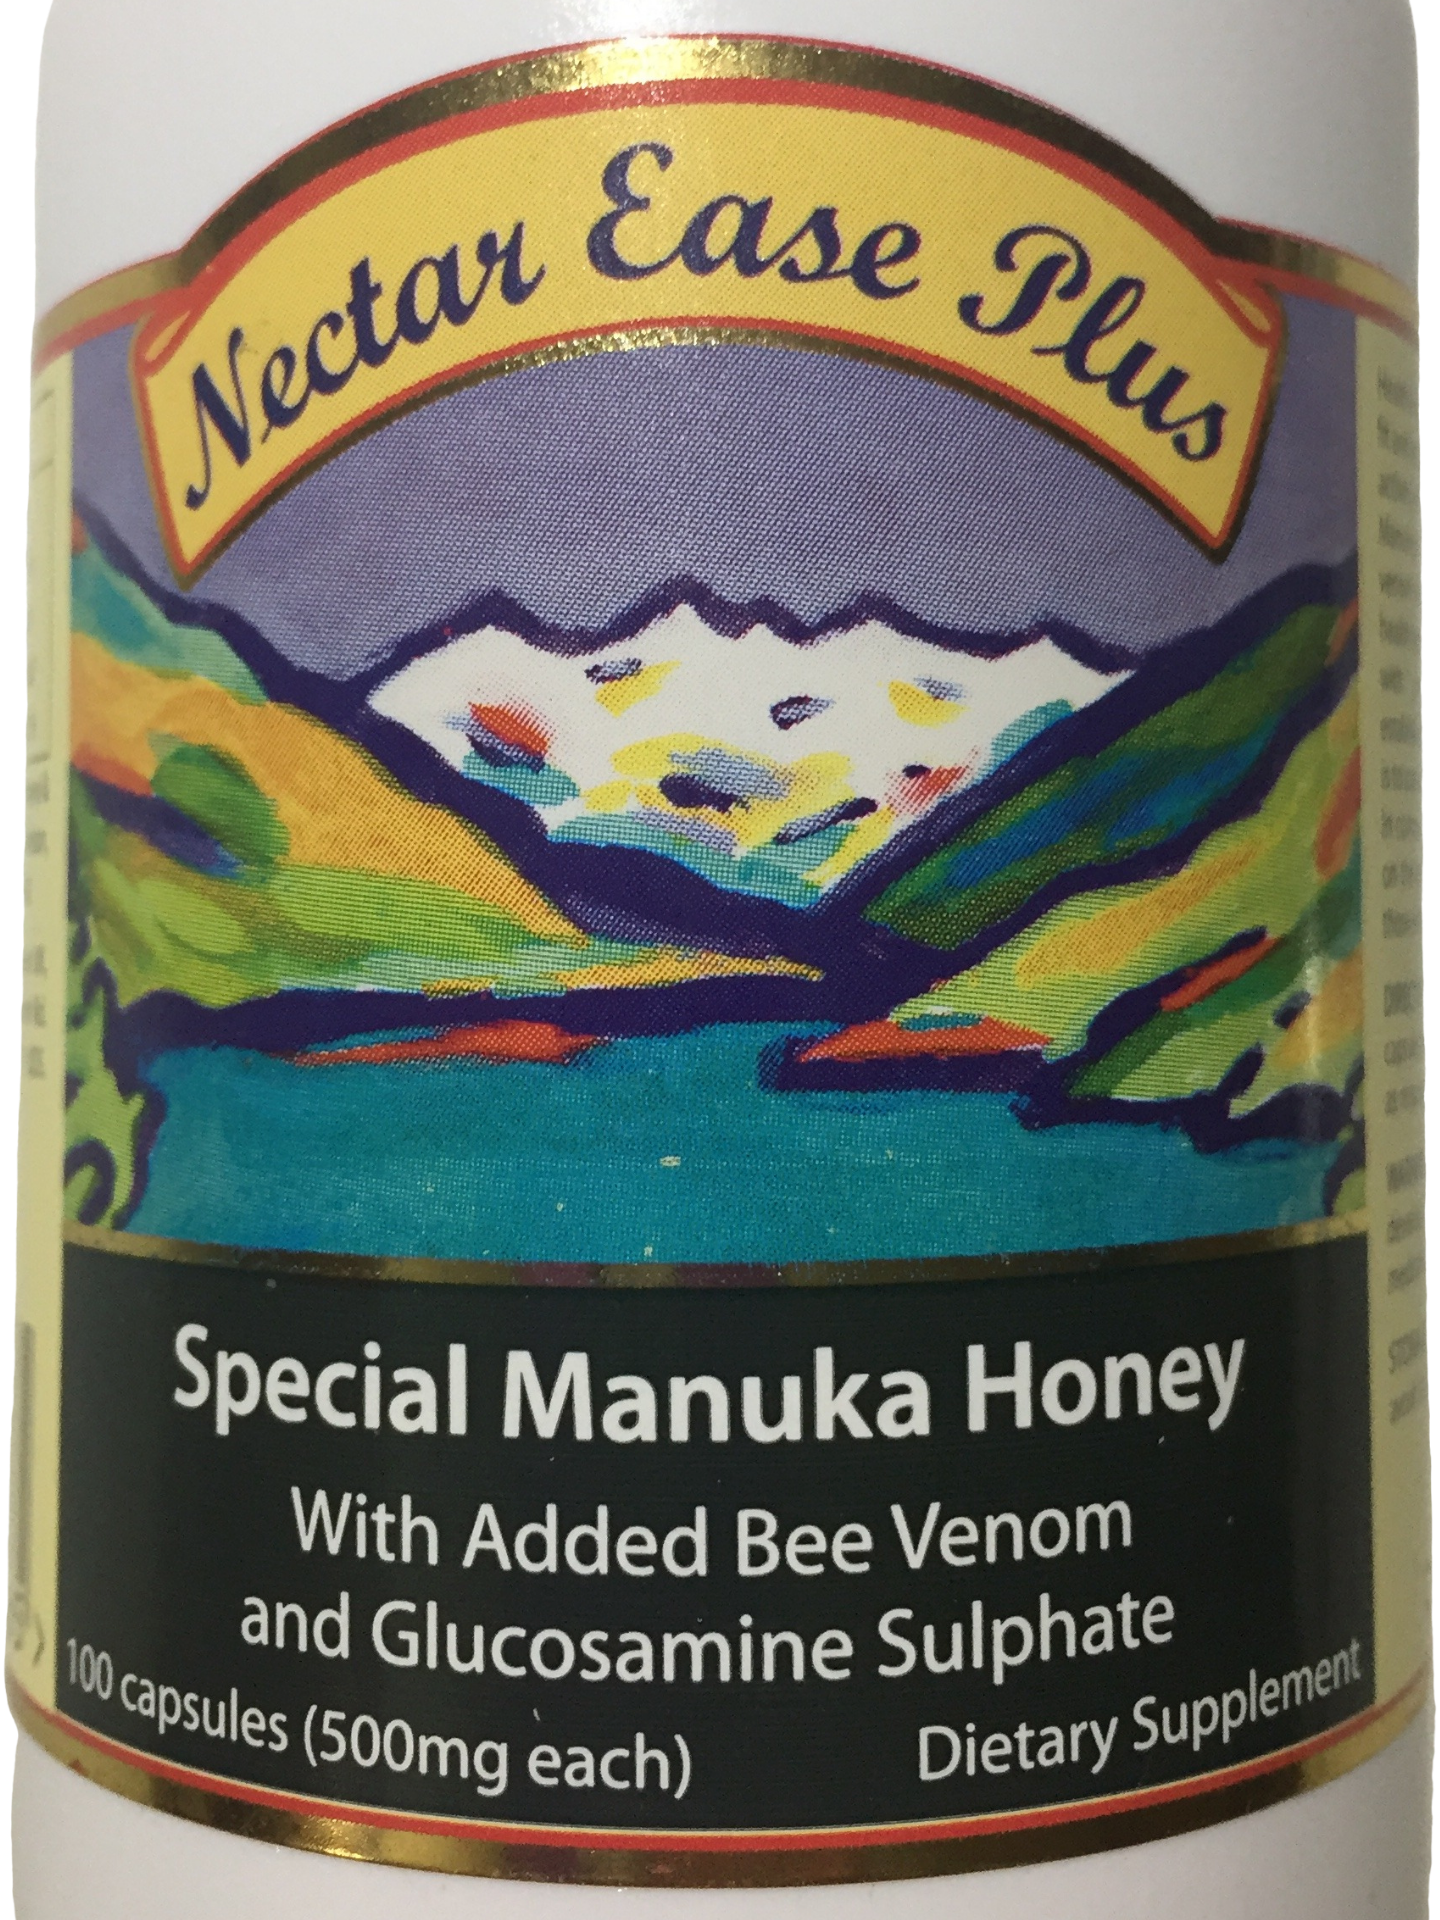 Nectar Ease Plus Capsules, with Added Bee Venom, Genuine New Zealand non-GMO